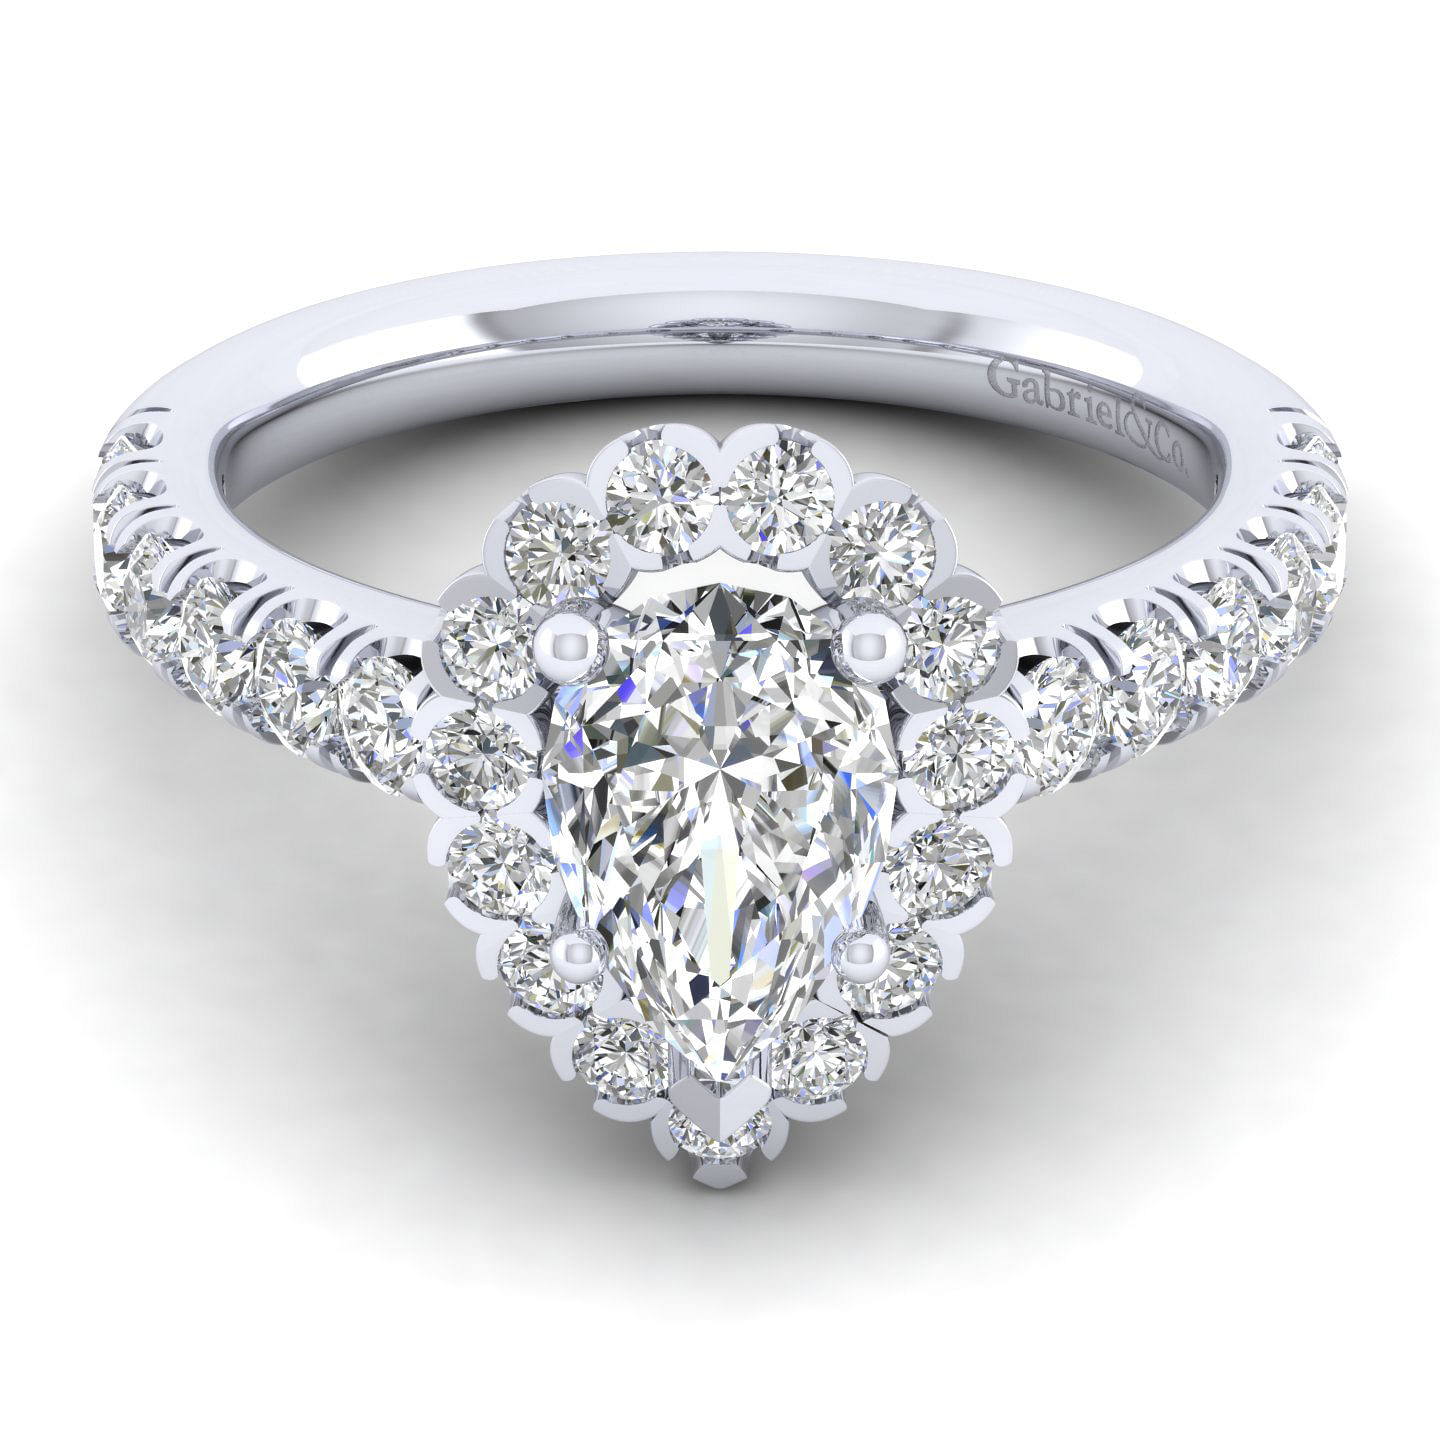 Rosalyn - 14K White Gold Pear Shape Halo Diamond Engagement Ring